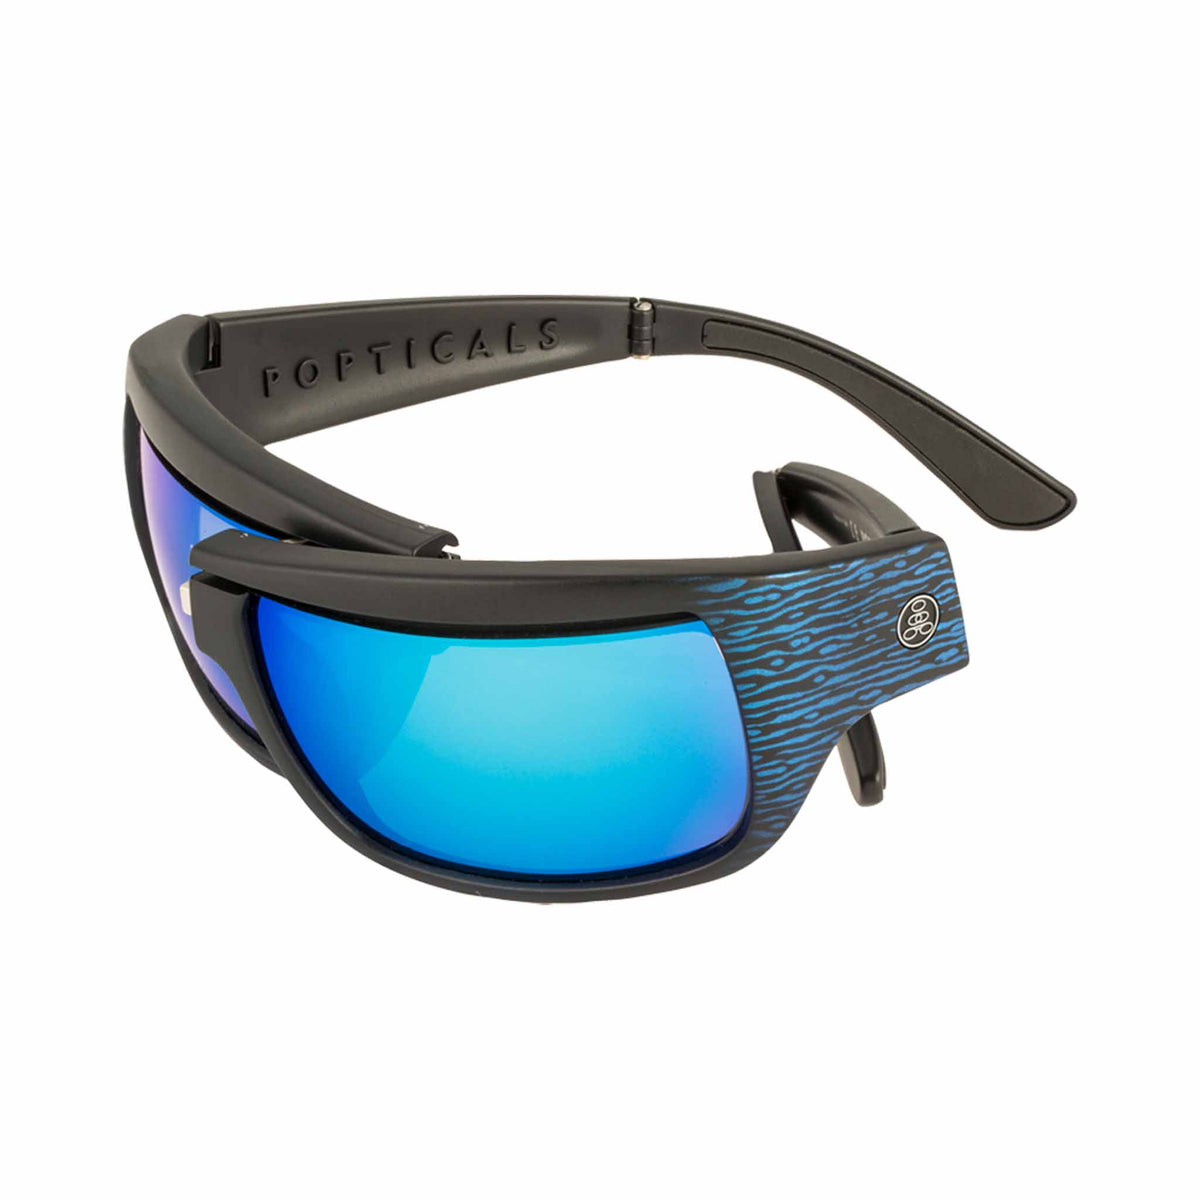 Popticals, Premium Compact Sunglasses, PopH2O, 010070-EUUN, Polarized Sunglasses, Matte Blue/Black Wood Frame, Gray Lenses w/Blue Mirror Finish, Spider View